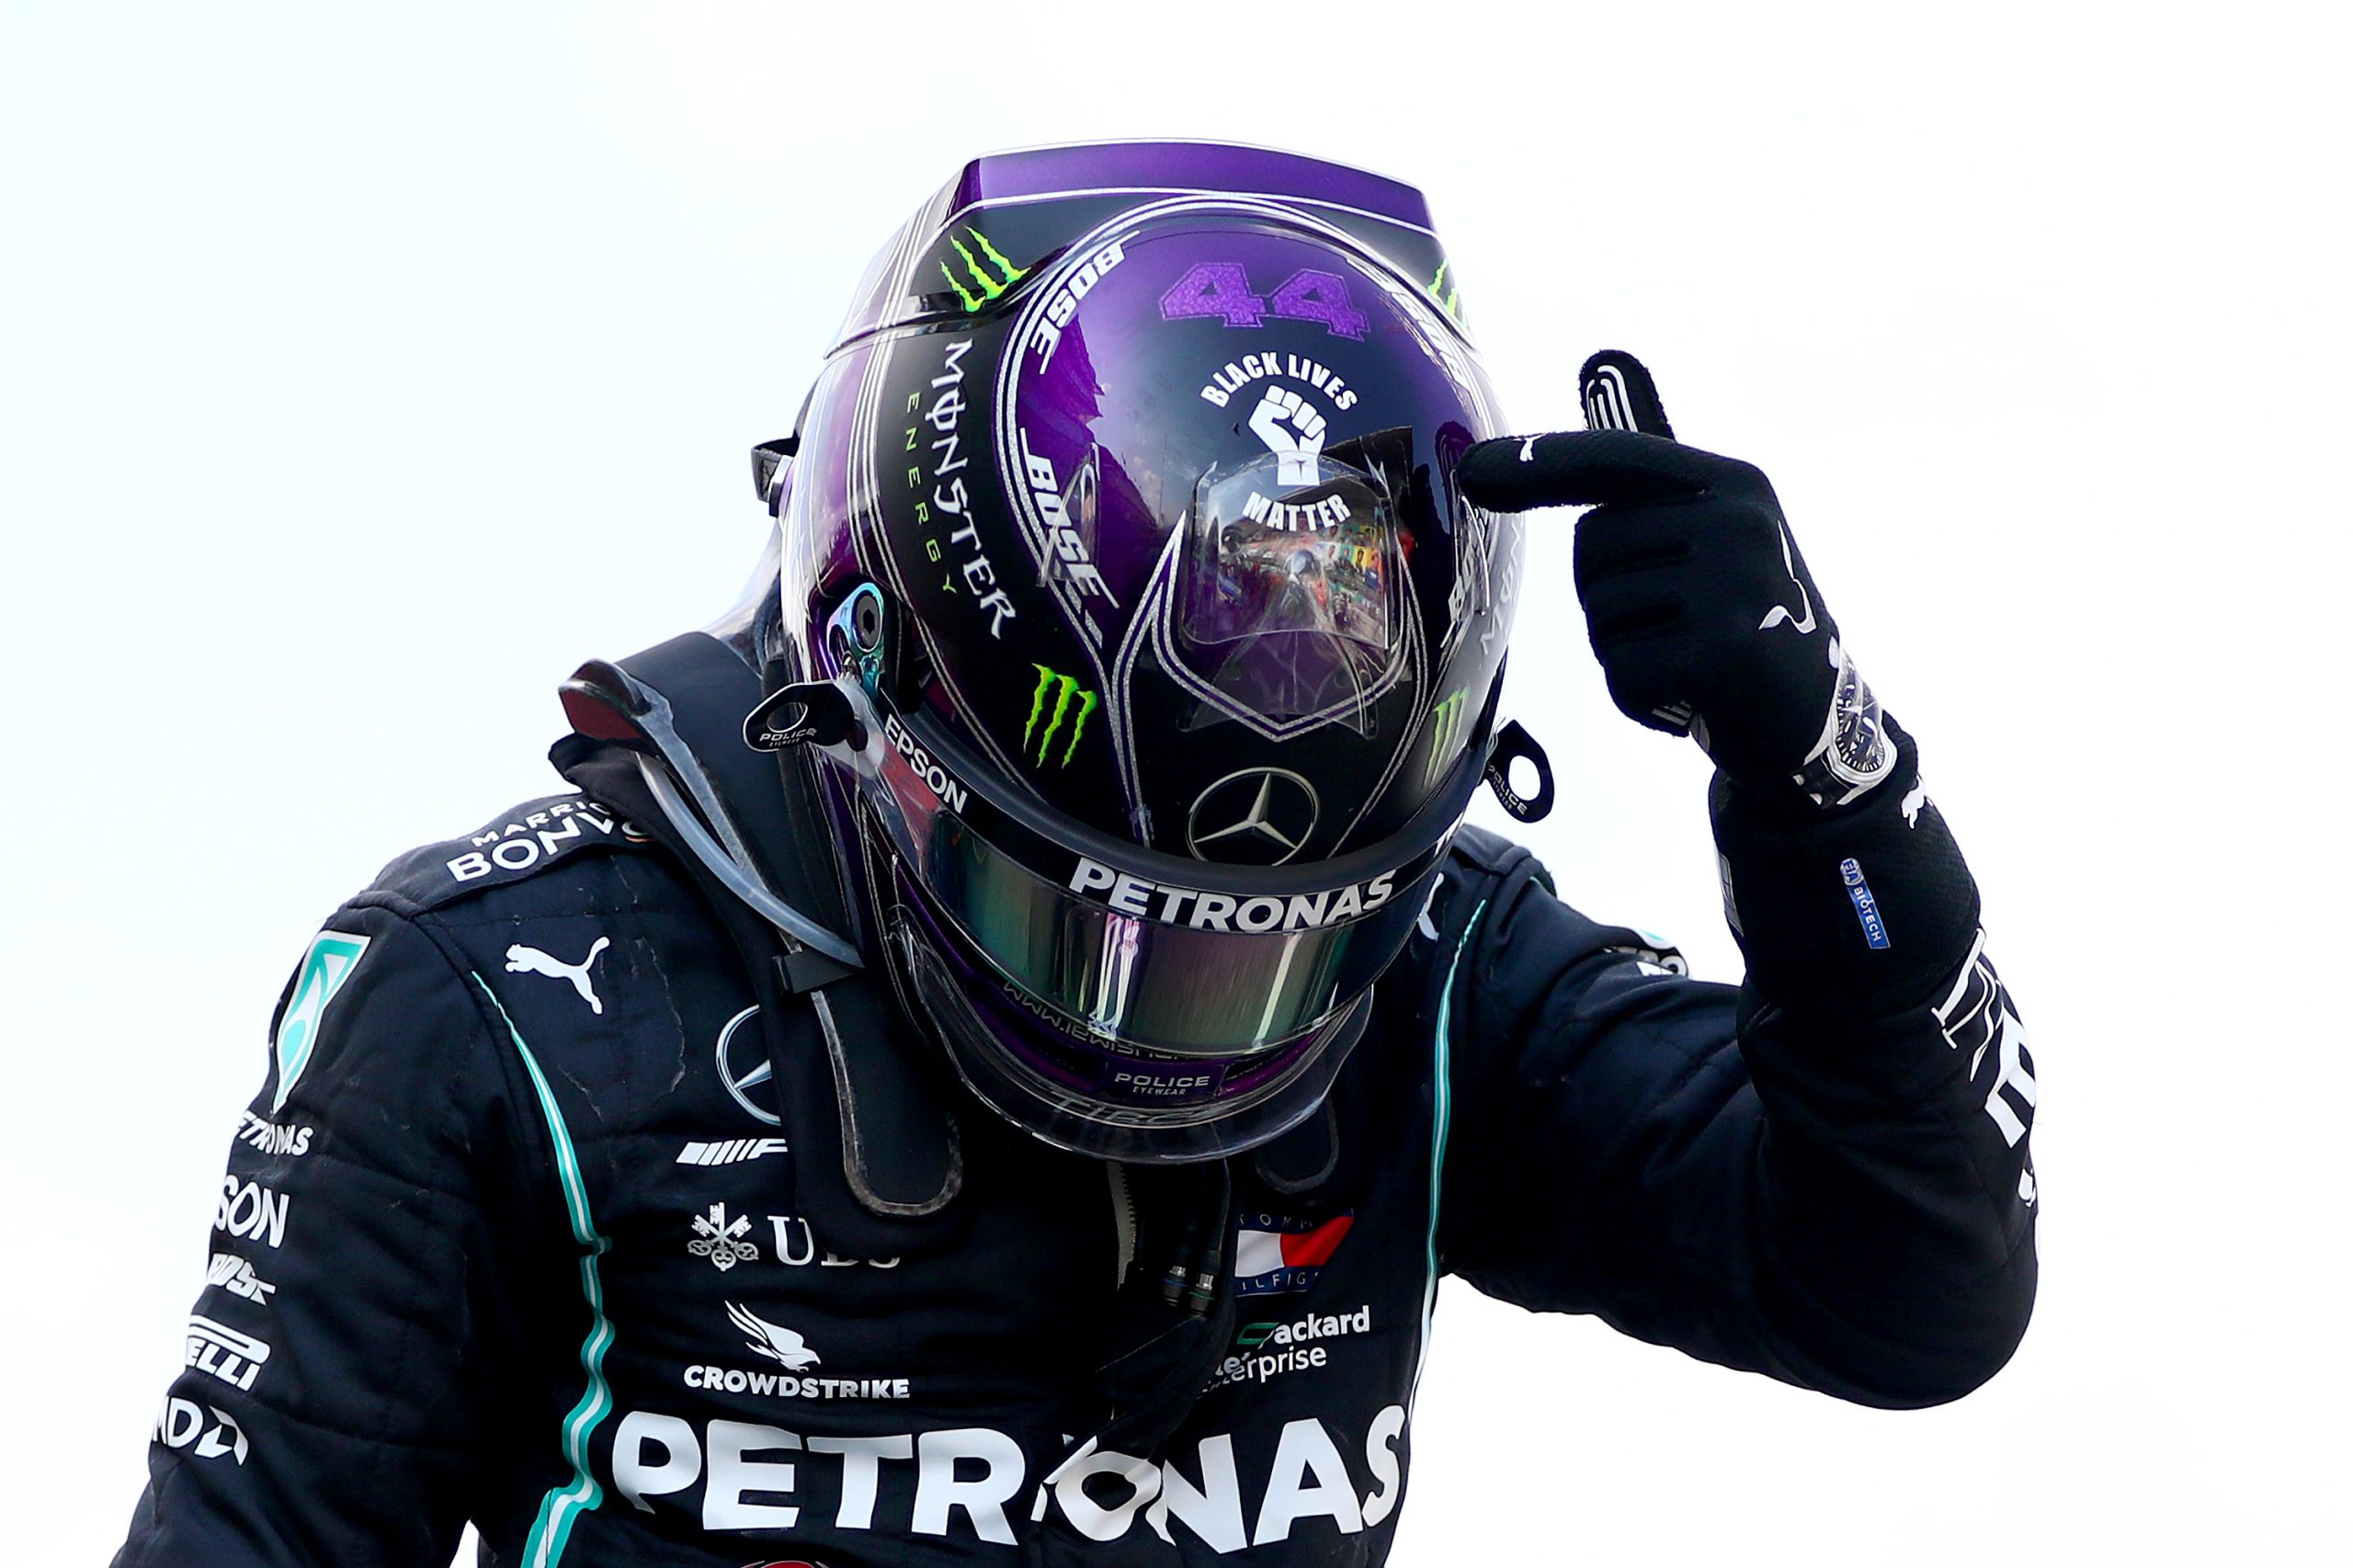 Lewis Hamliton points to the top of his racing helmet